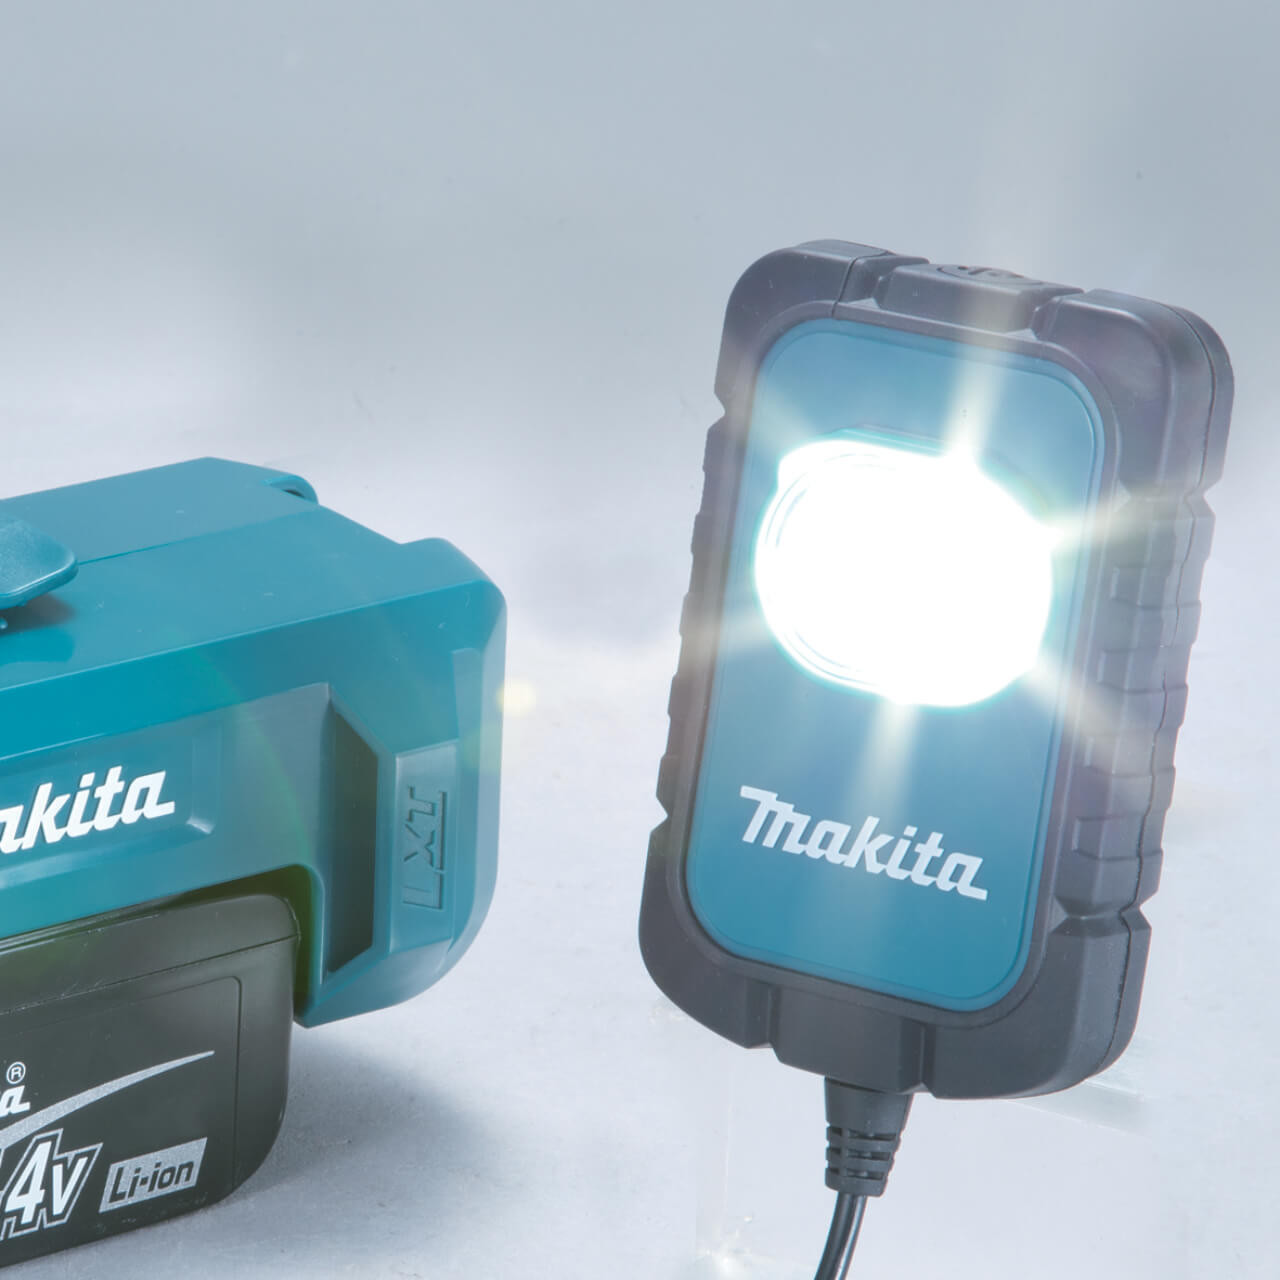 Makita 18V Mobile LED Compact Flashlight